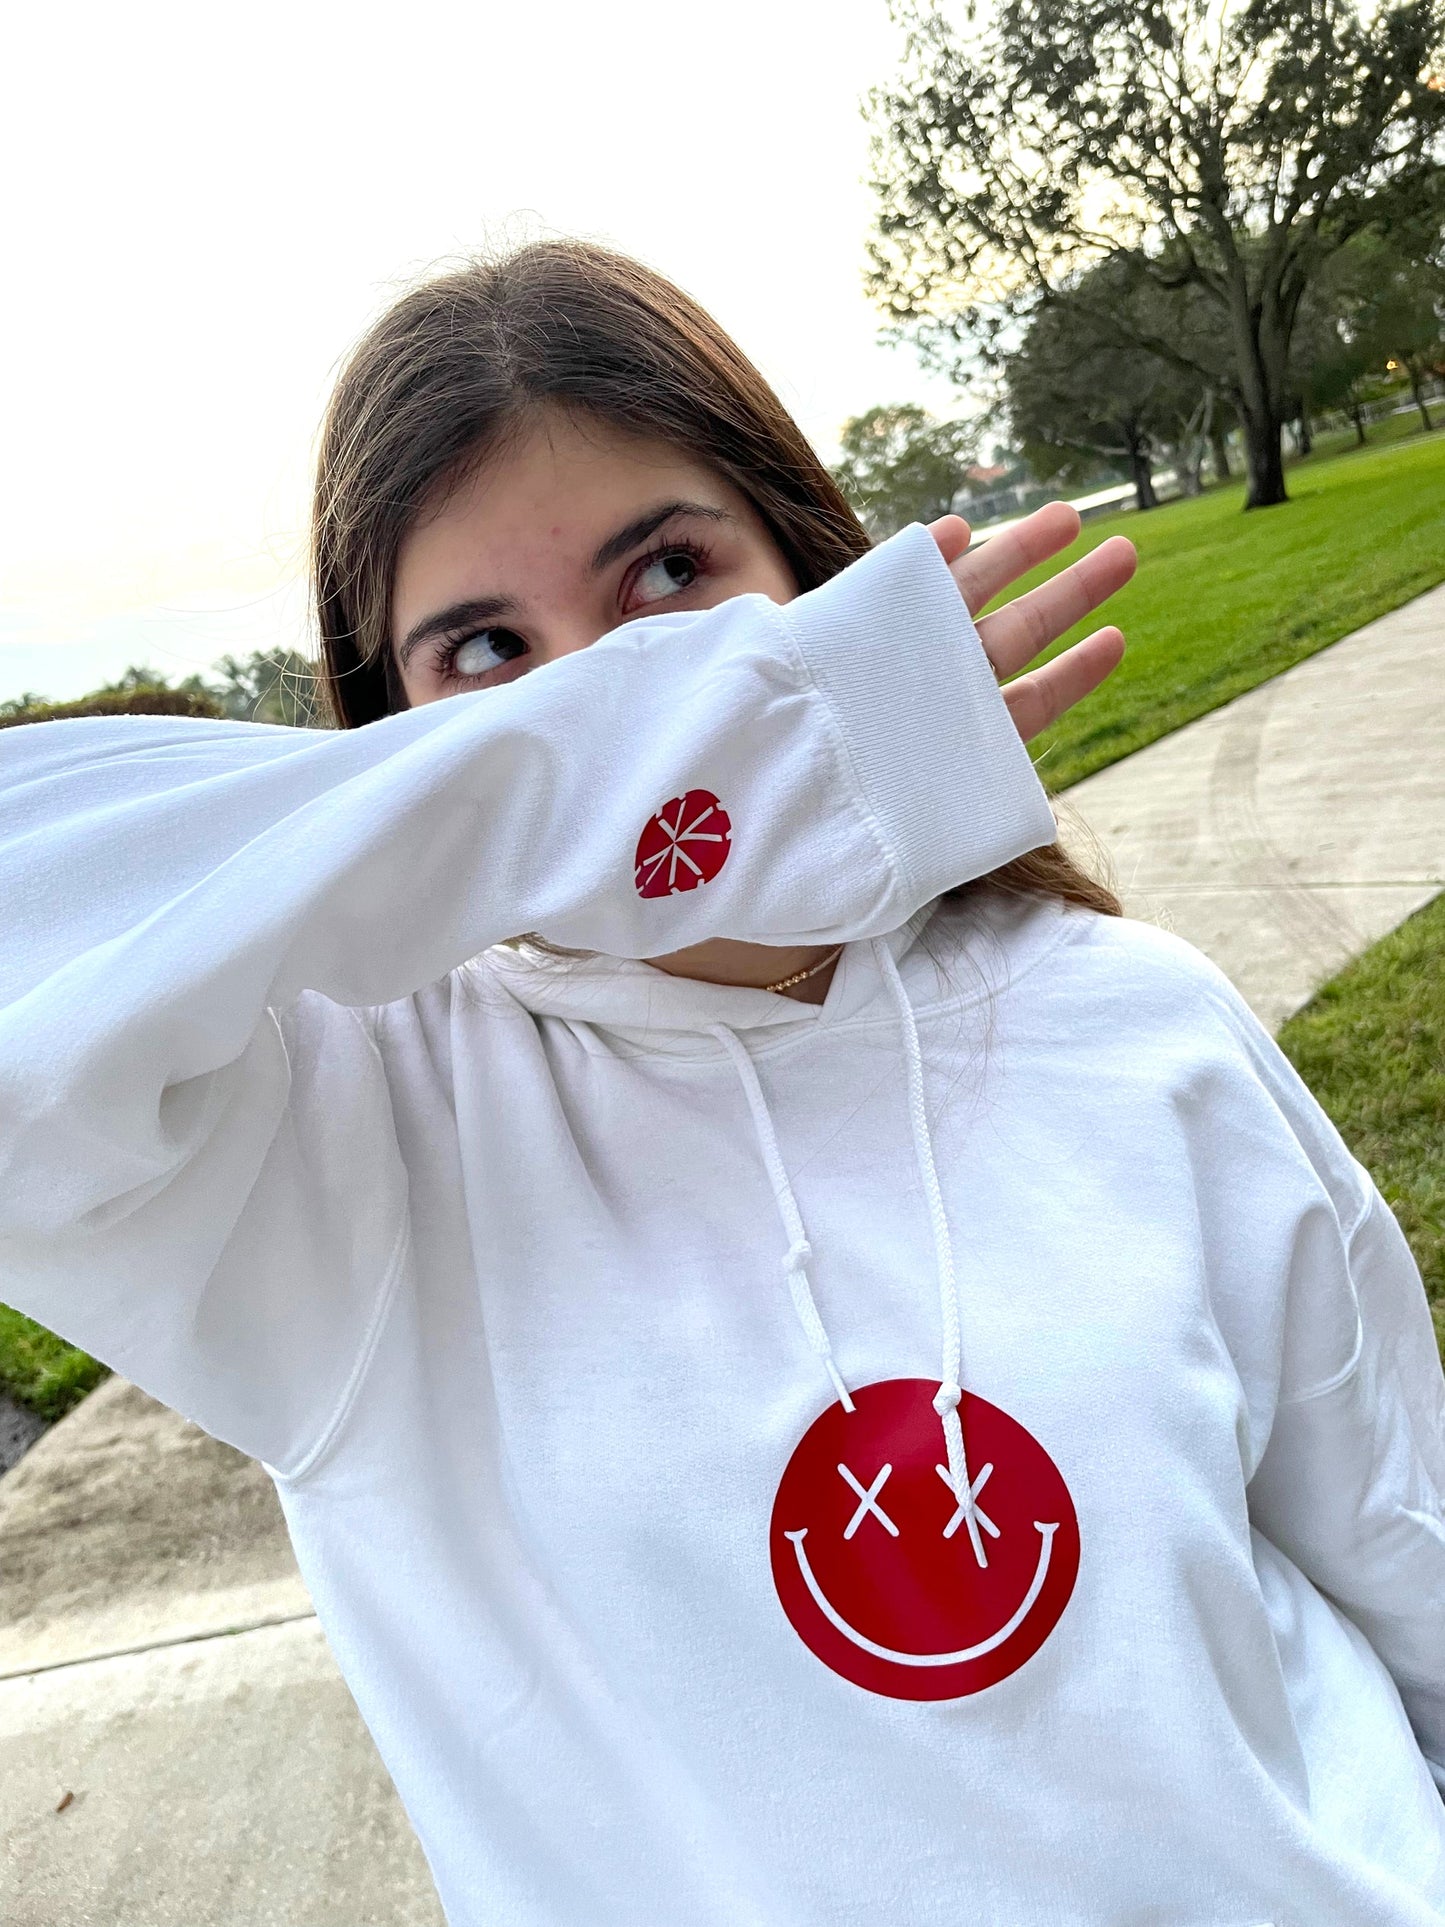 I’m so thankful we met sweatshirts